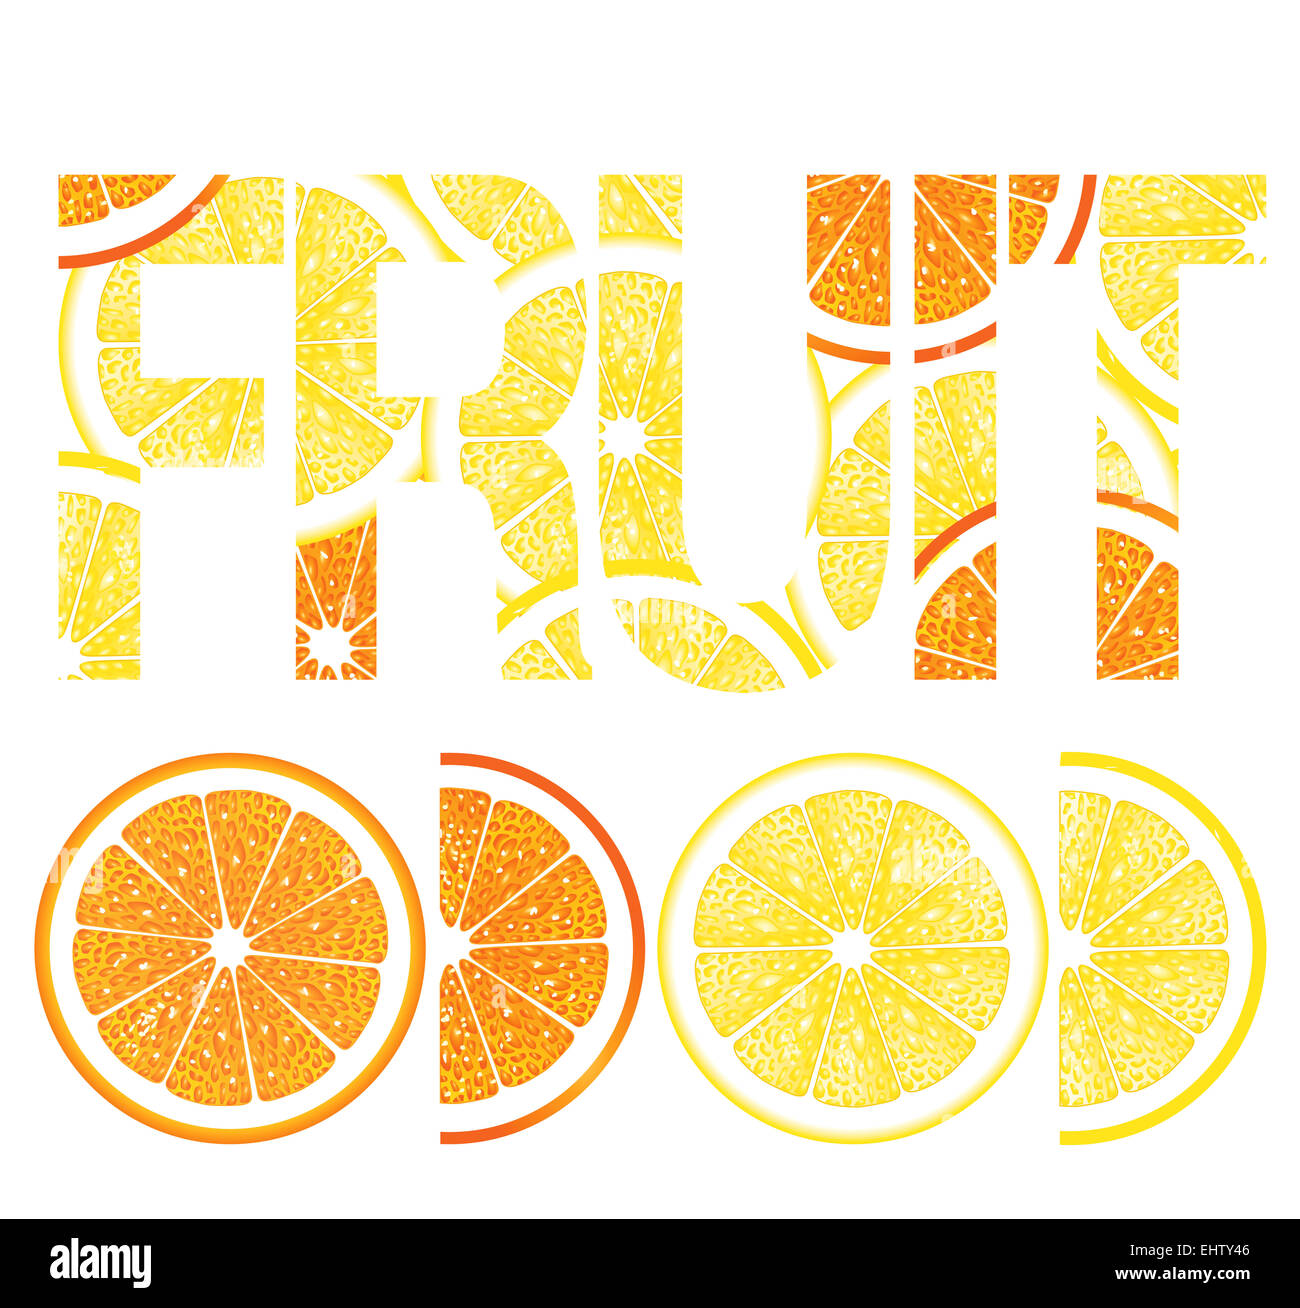 Citrus fruits , lemons and oranges Stock Photo